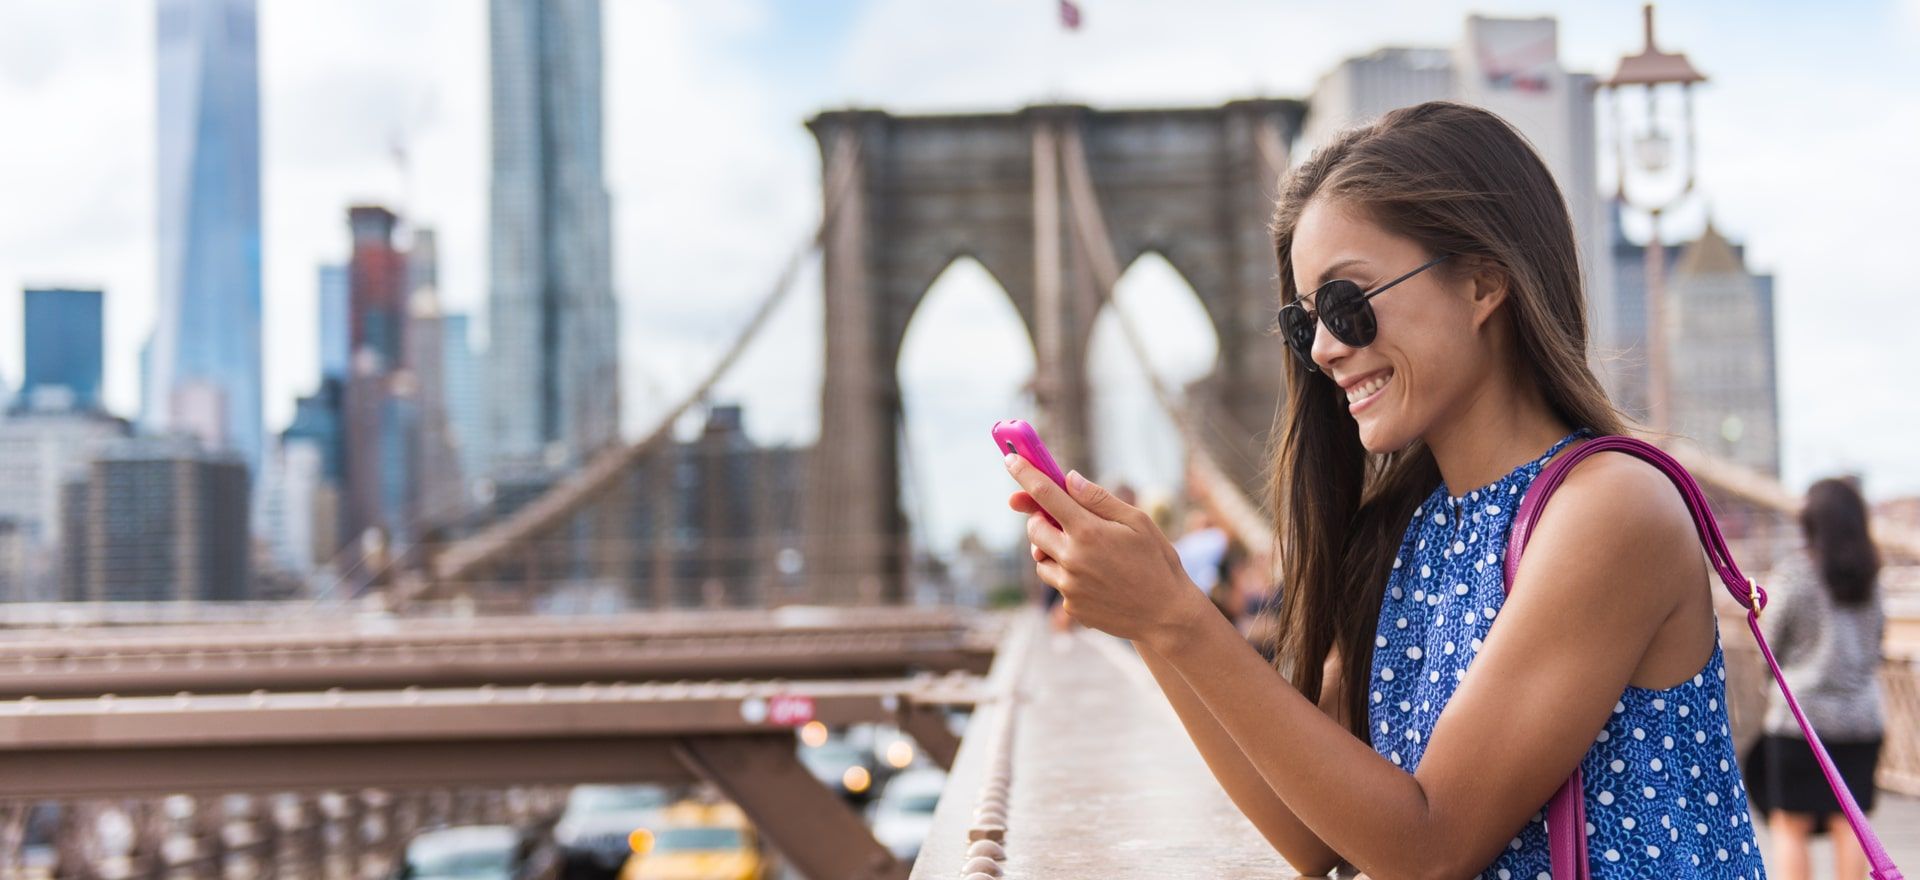 New York City woman using phone